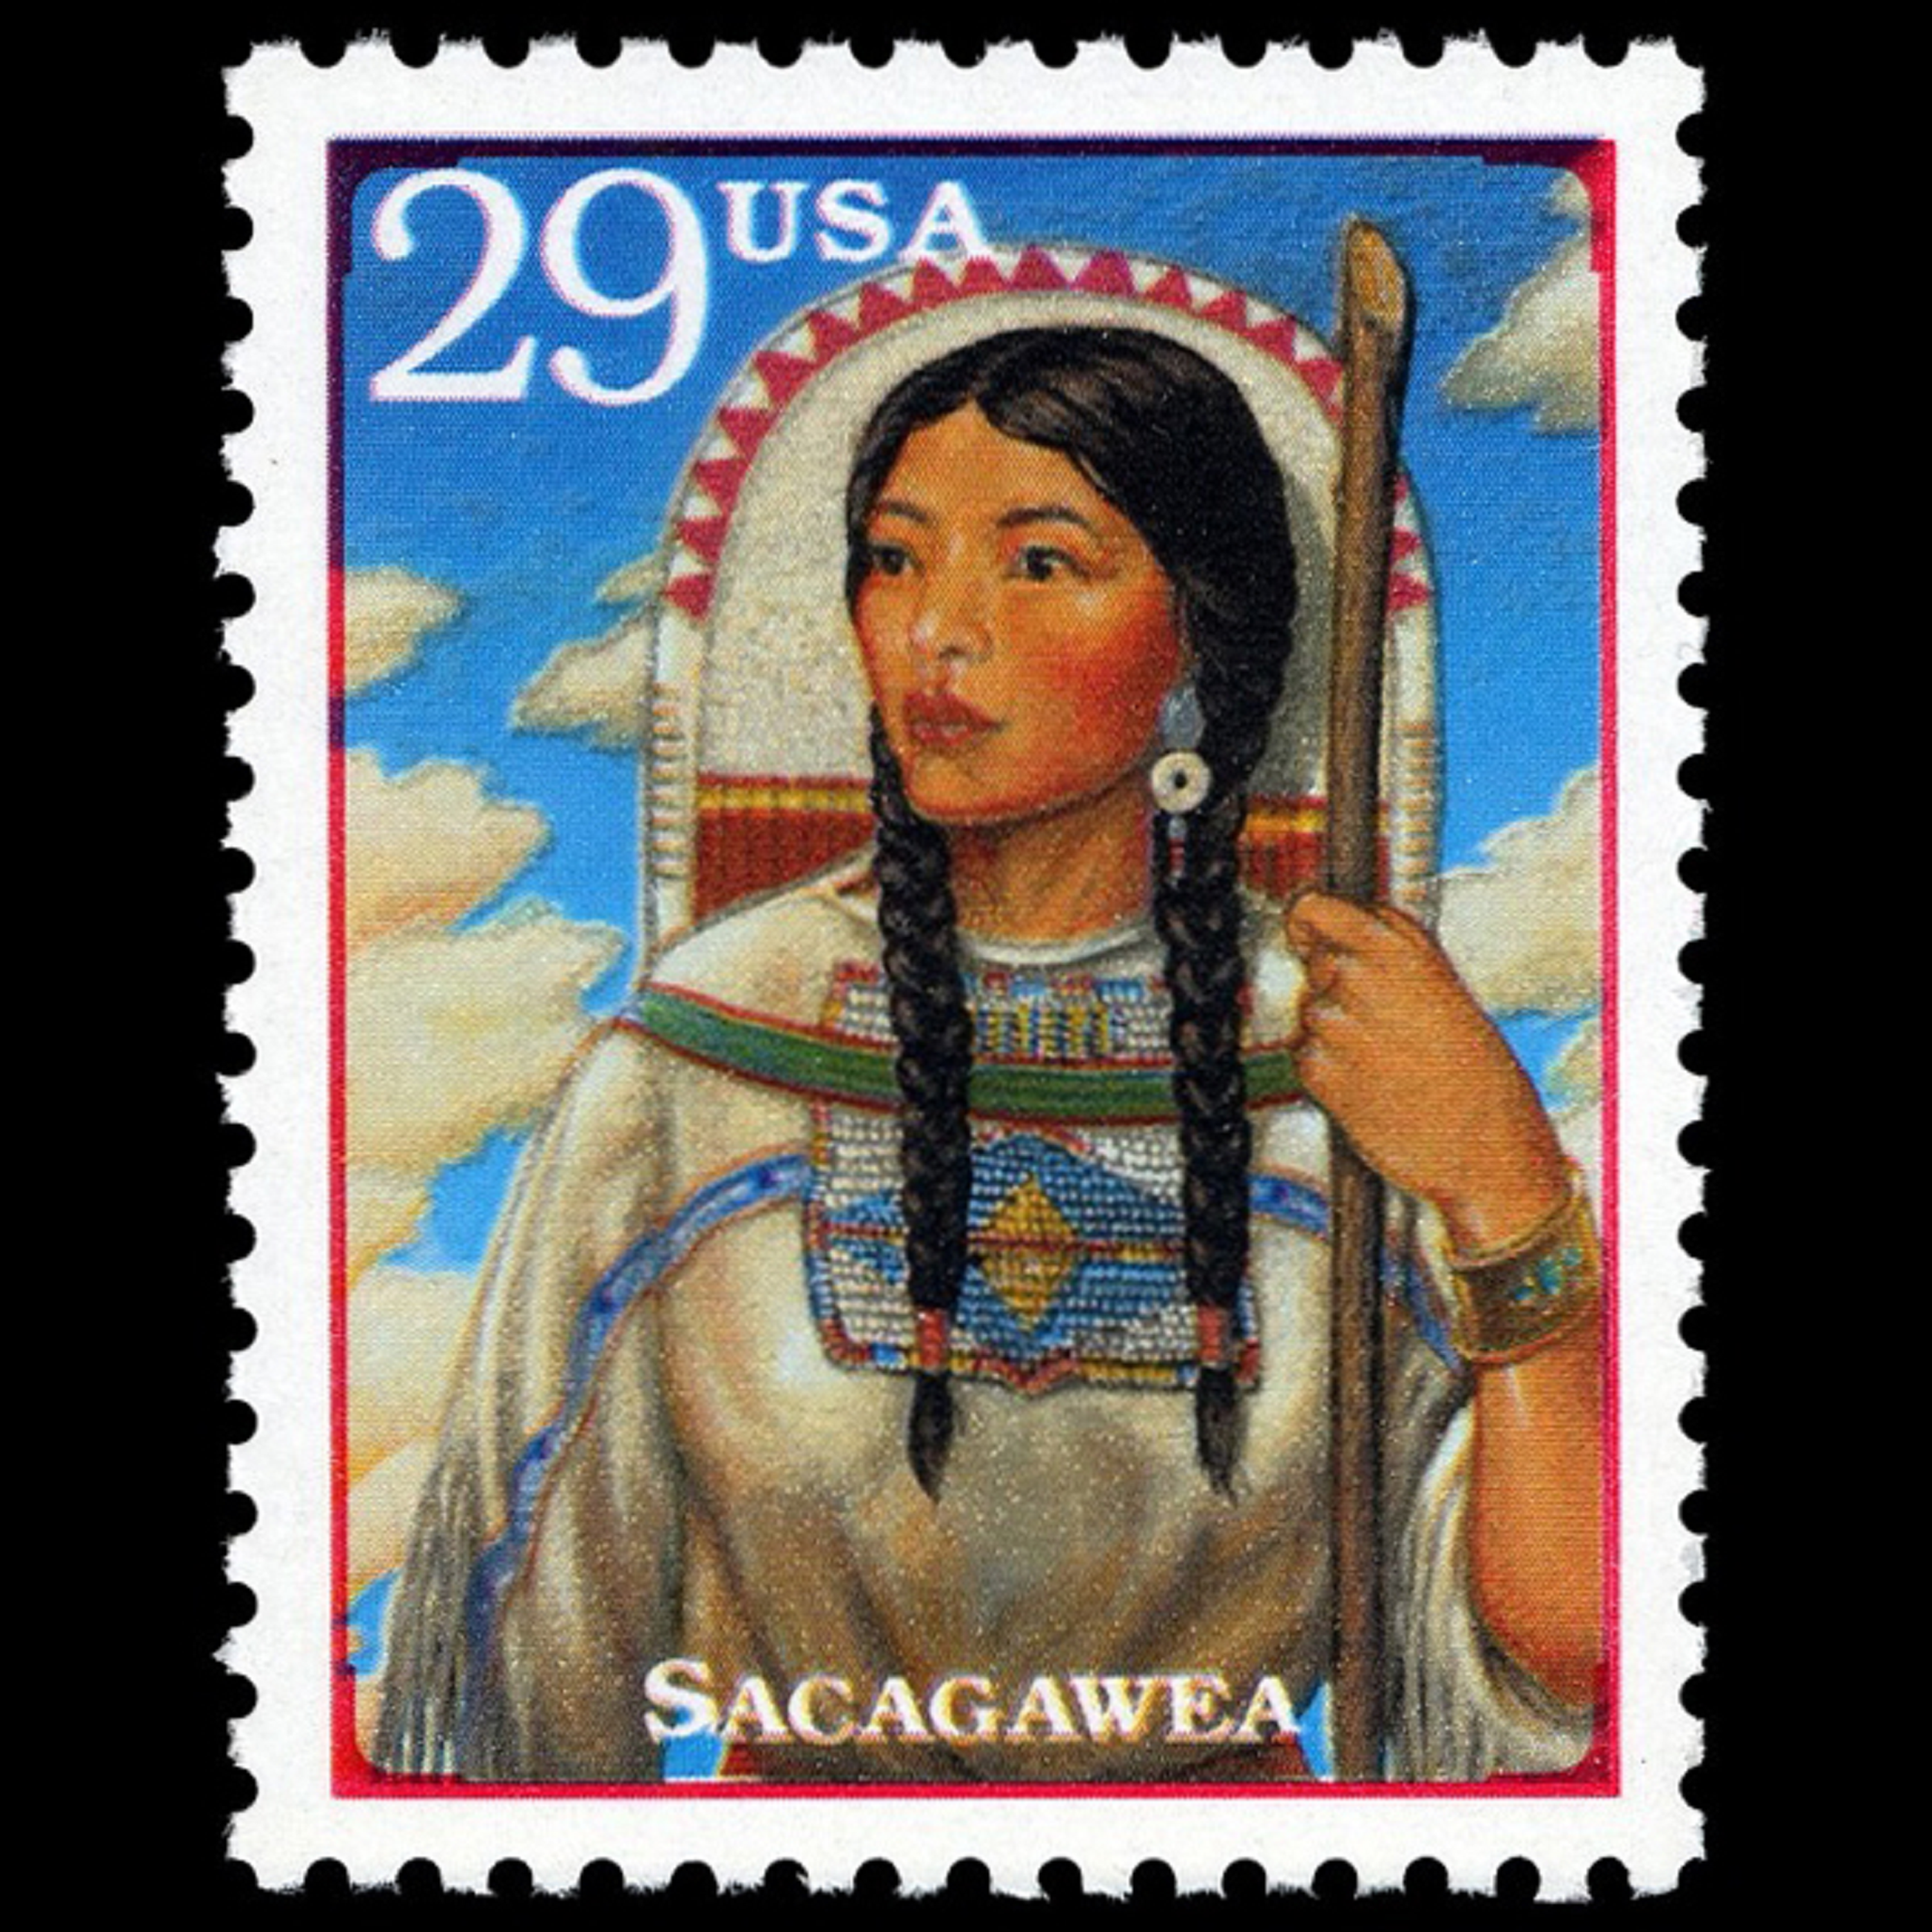 3.17 Sacagawea (3): A tool of divine direction